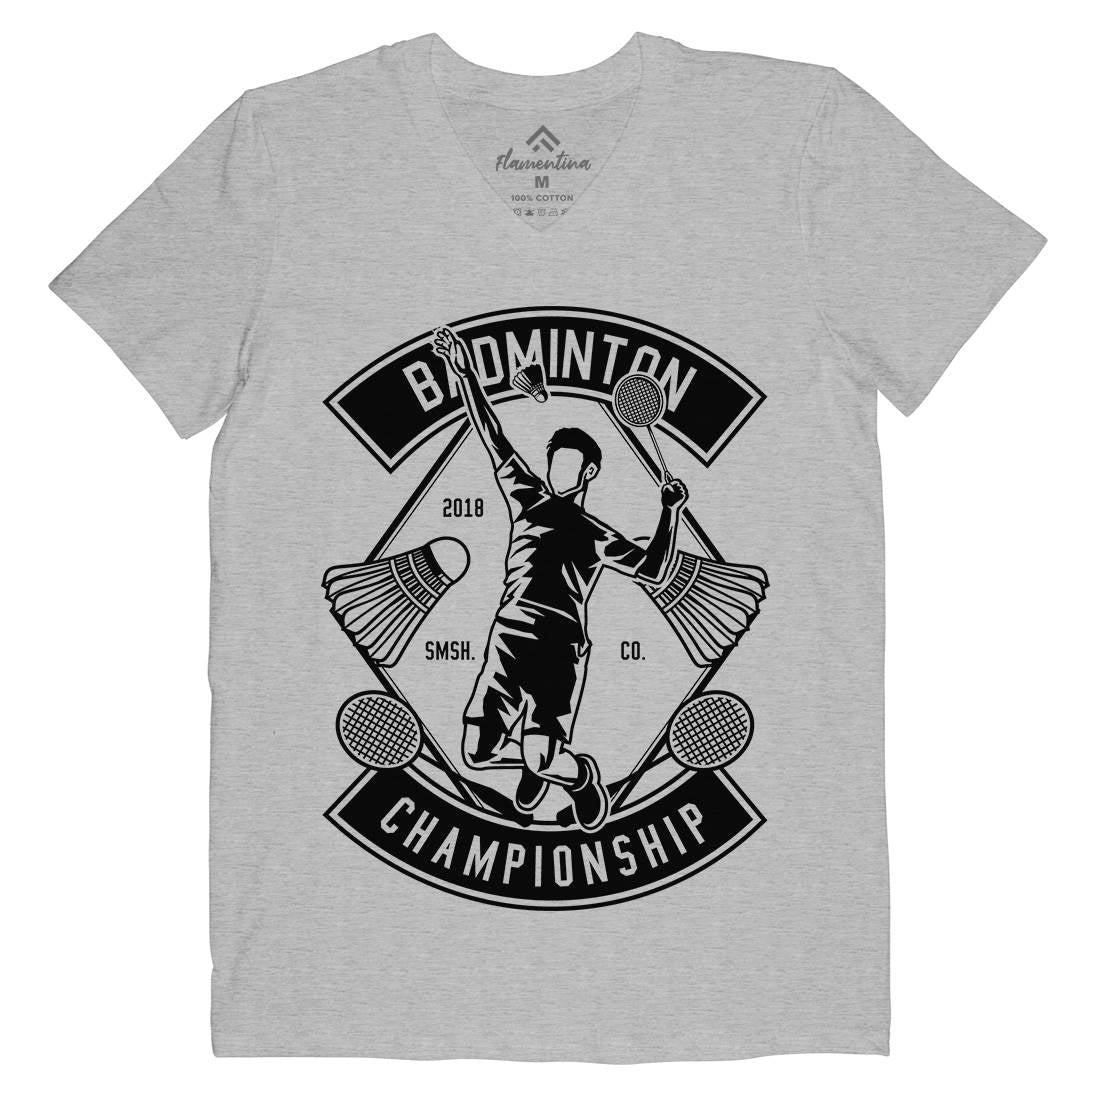 Badminton Championship Mens V-Neck T-Shirt Sport B486